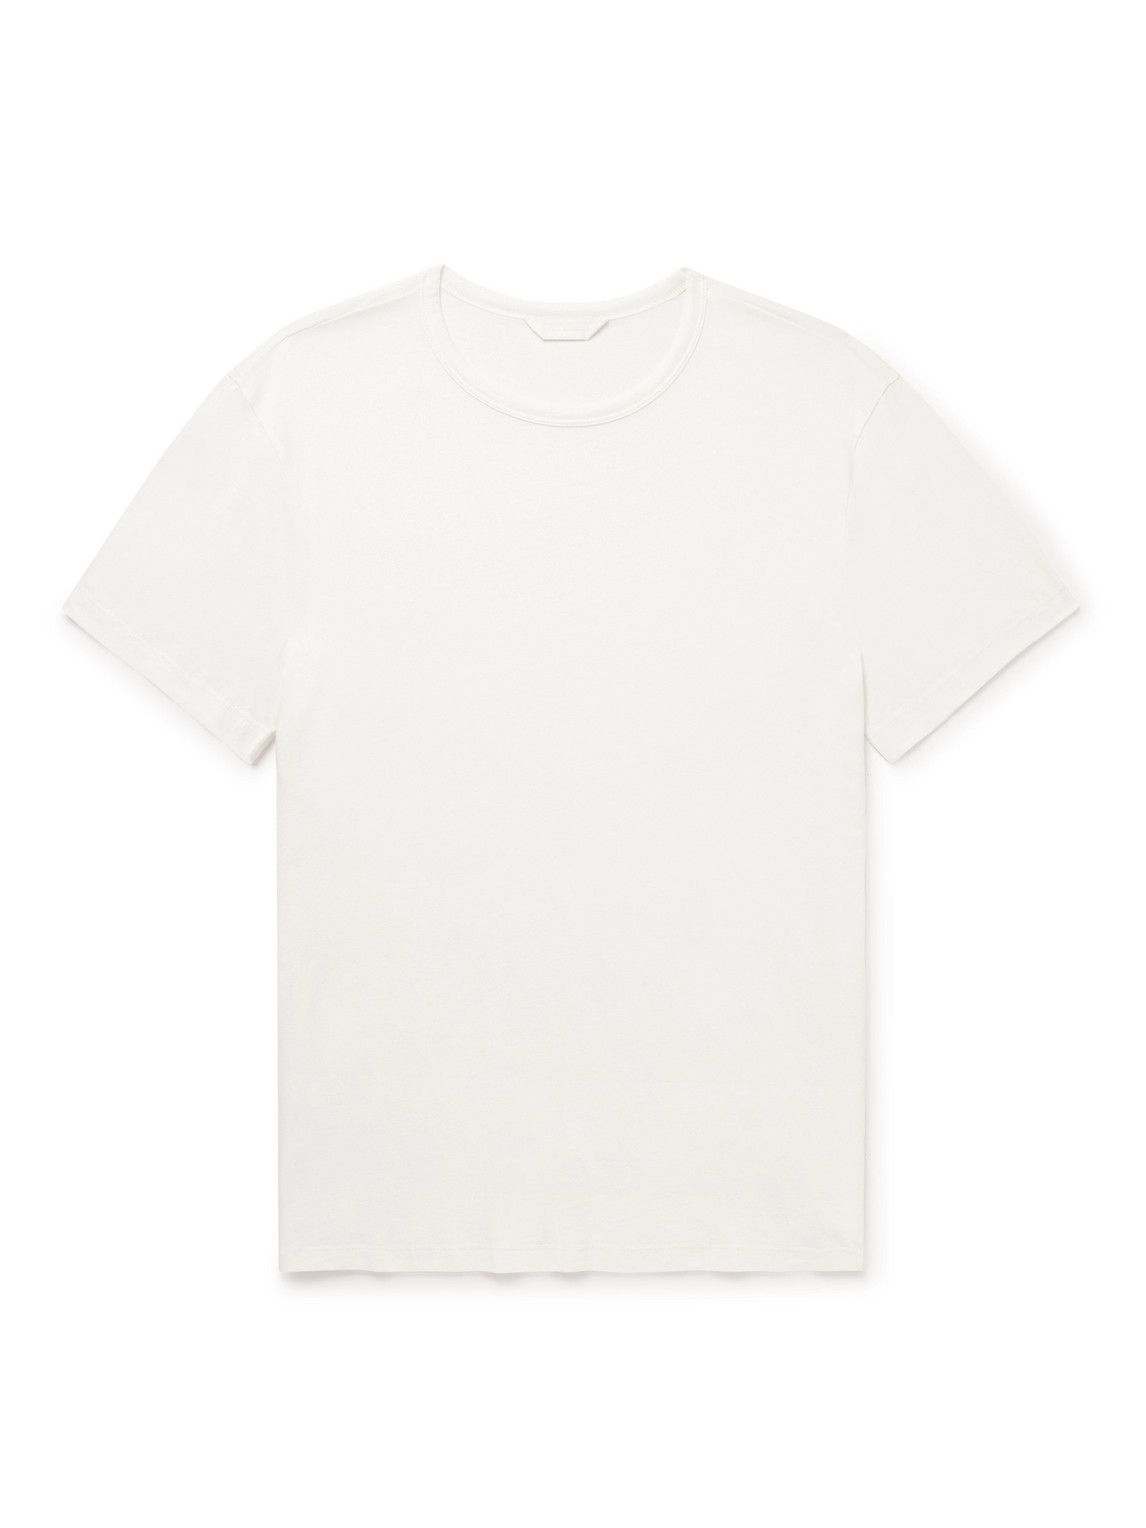 Club Monaco - Luxe Featherweight Cotton-Jersey T-Shirt - Men - White - L von Club Monaco